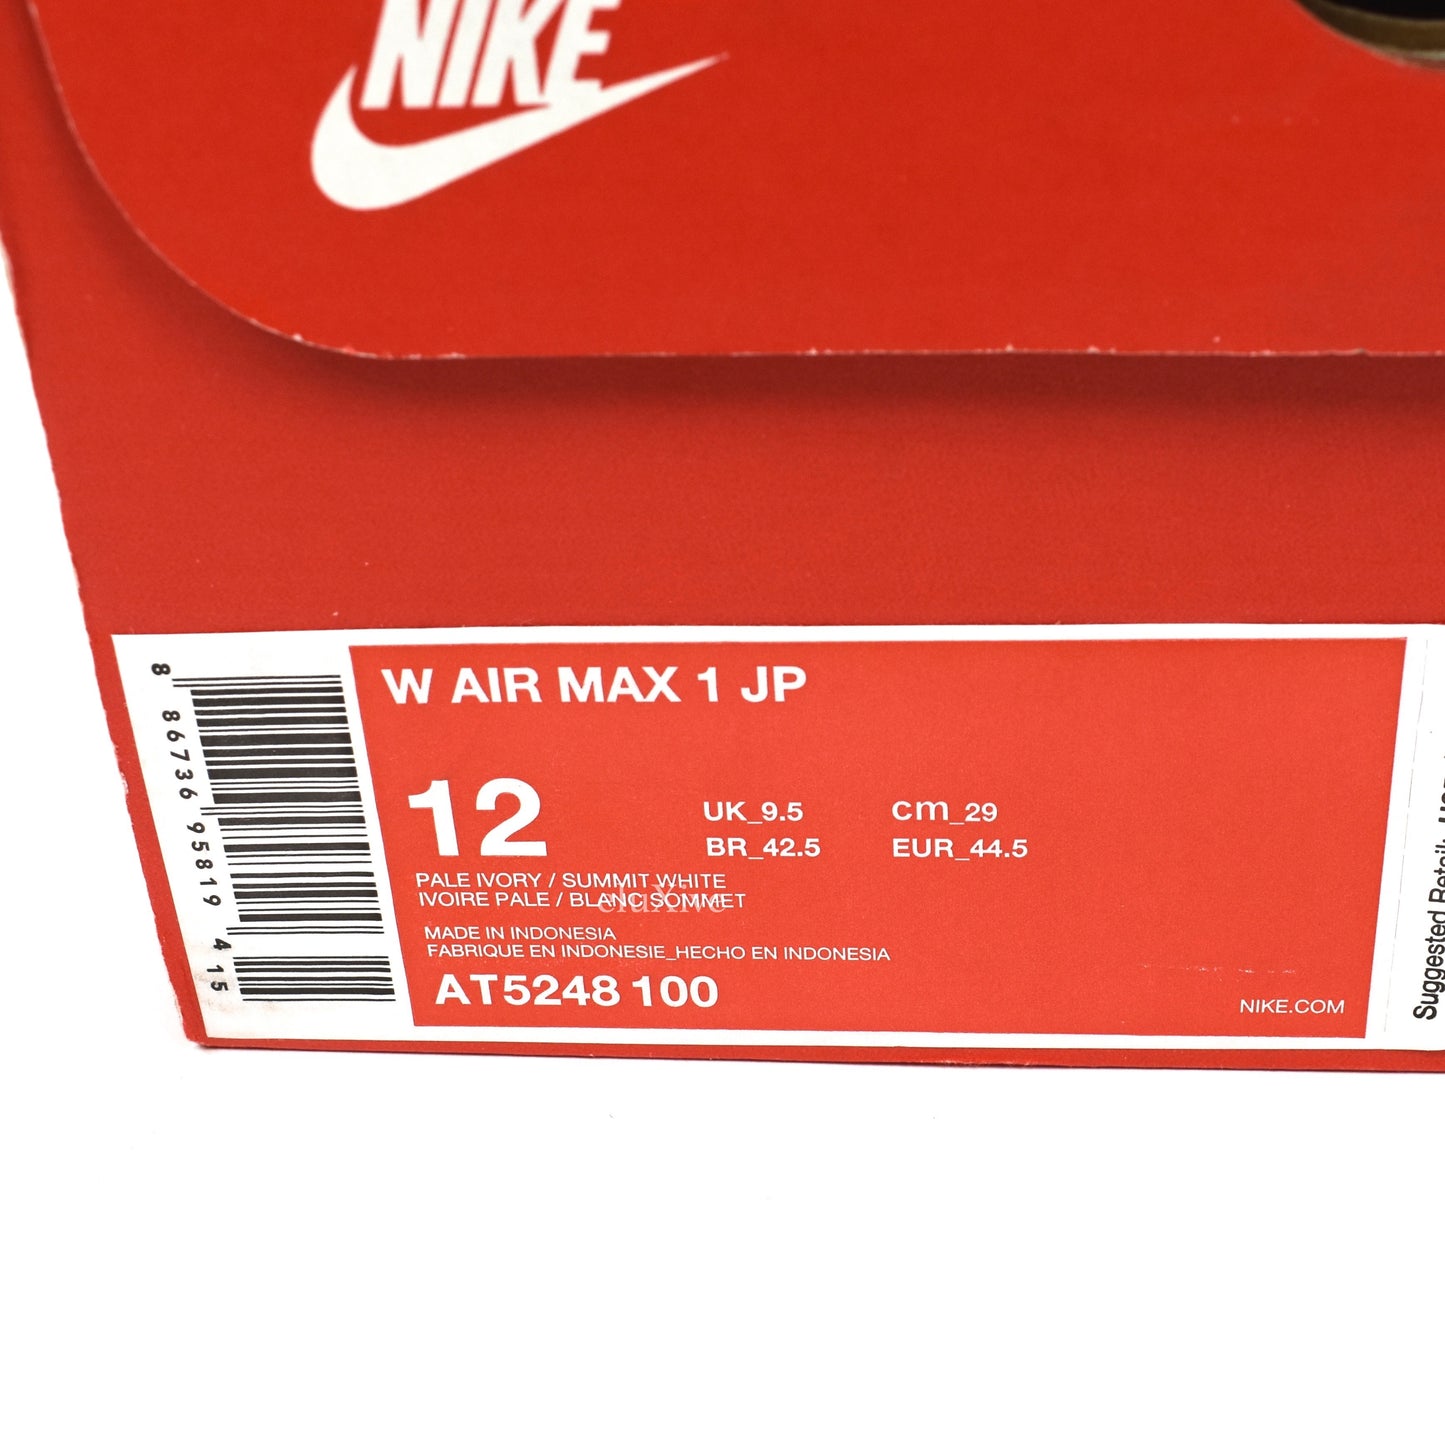 Nike - Air Max 1 JP 'Jelly Swoosh'